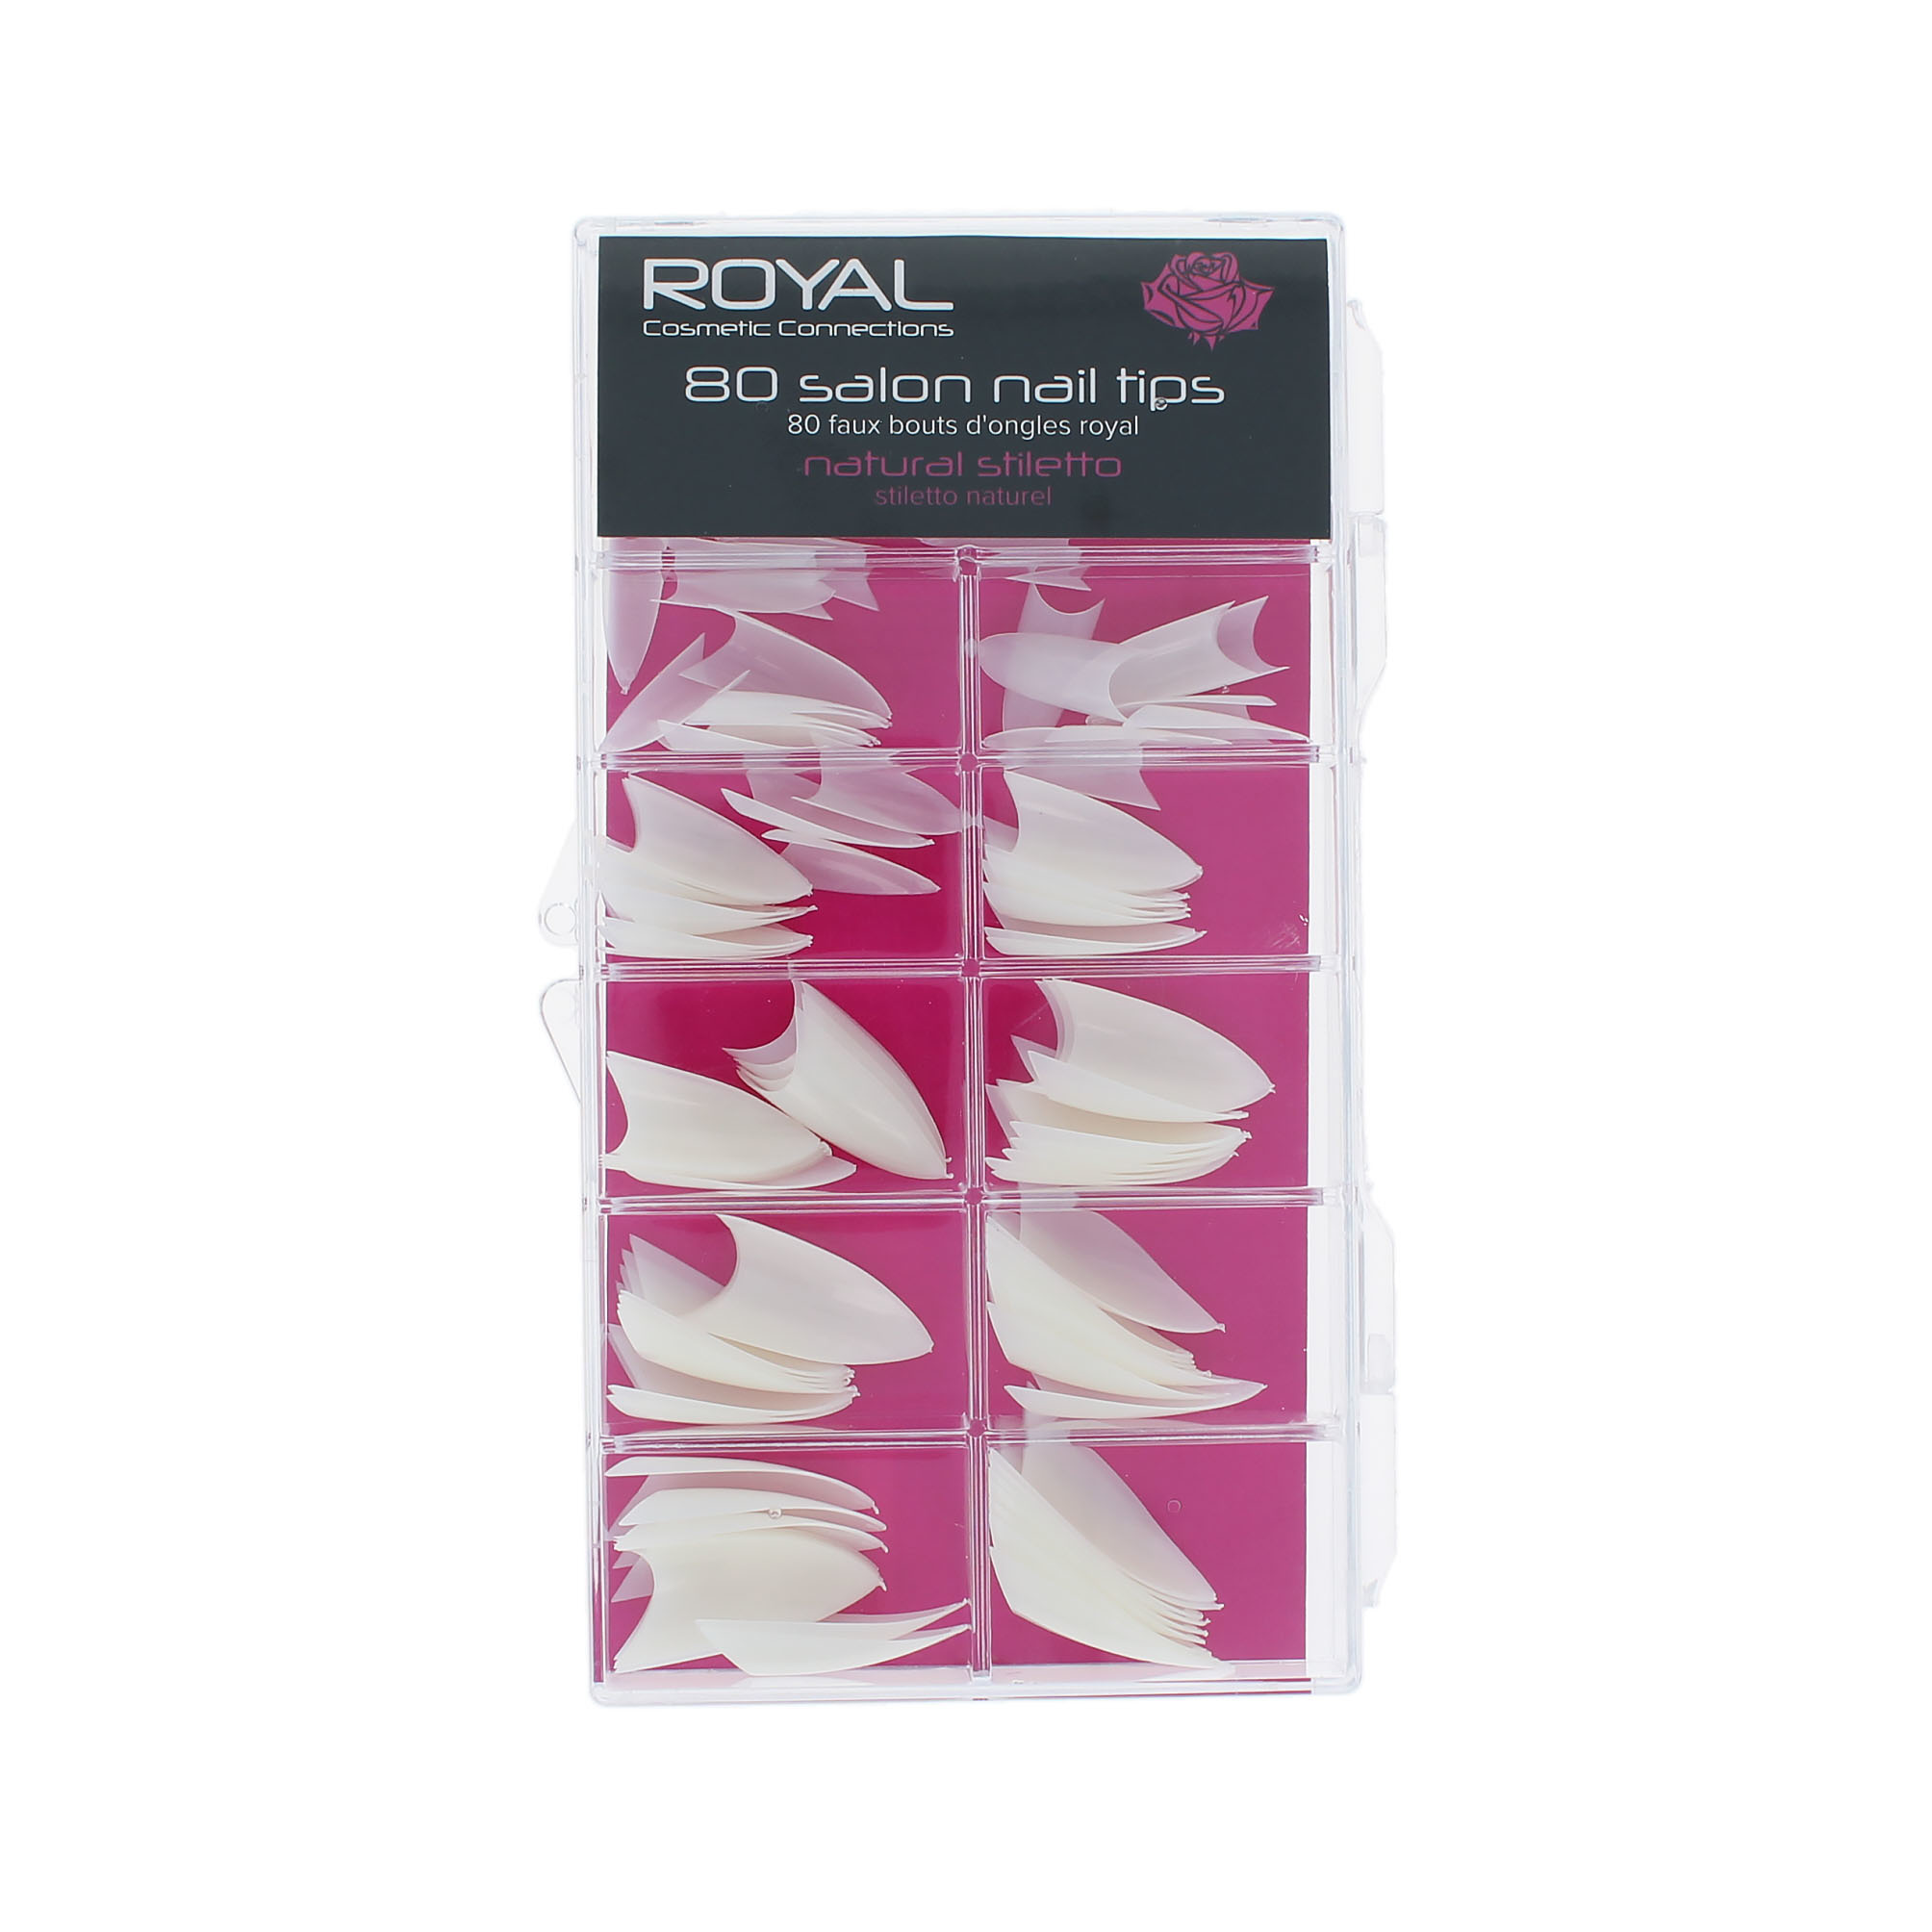 Royal 80 Salon Nail Tips - Natural Stiletto